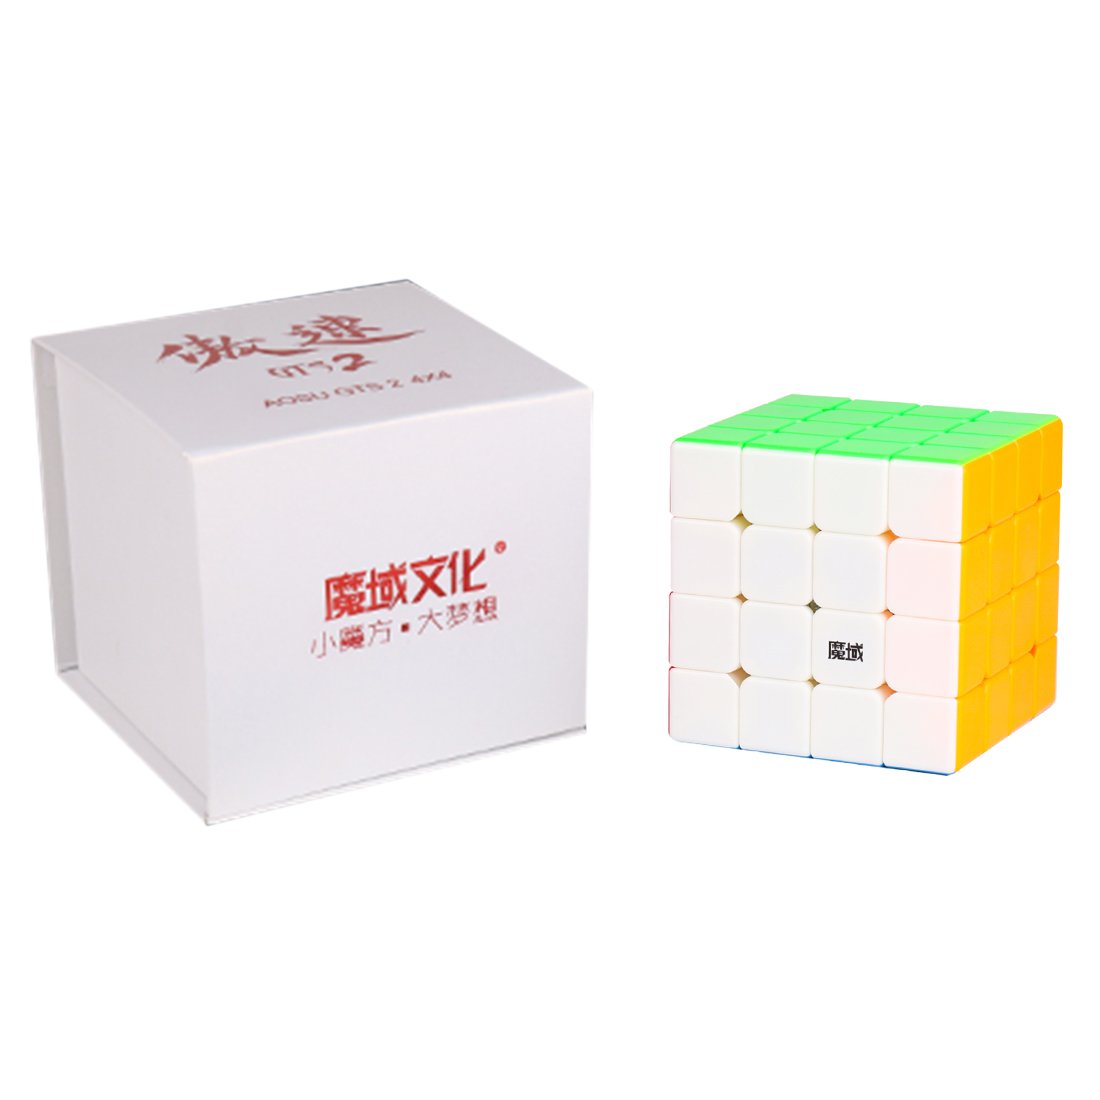 Yj8267 Moyu Aosu Gts2 Magic Cube 4X4 Stickerless